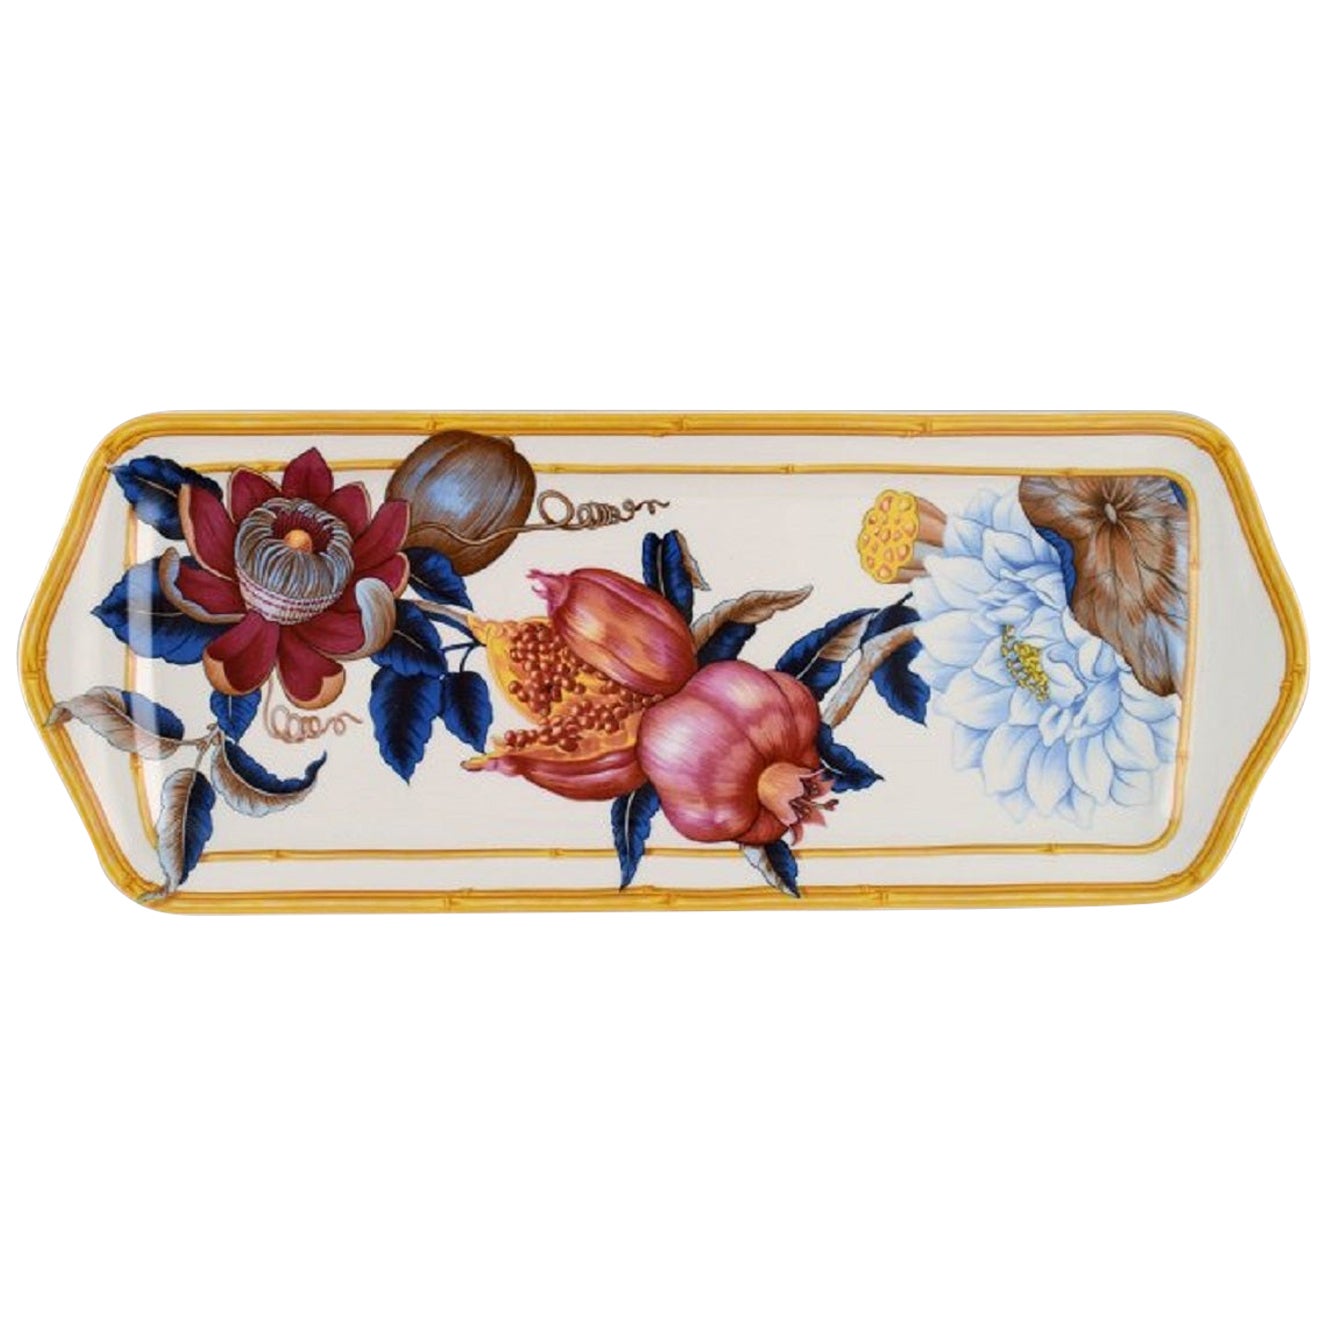 Porcelain of Paris, "Tropical Aurore", Oblong Porcelain Tray with Flowers